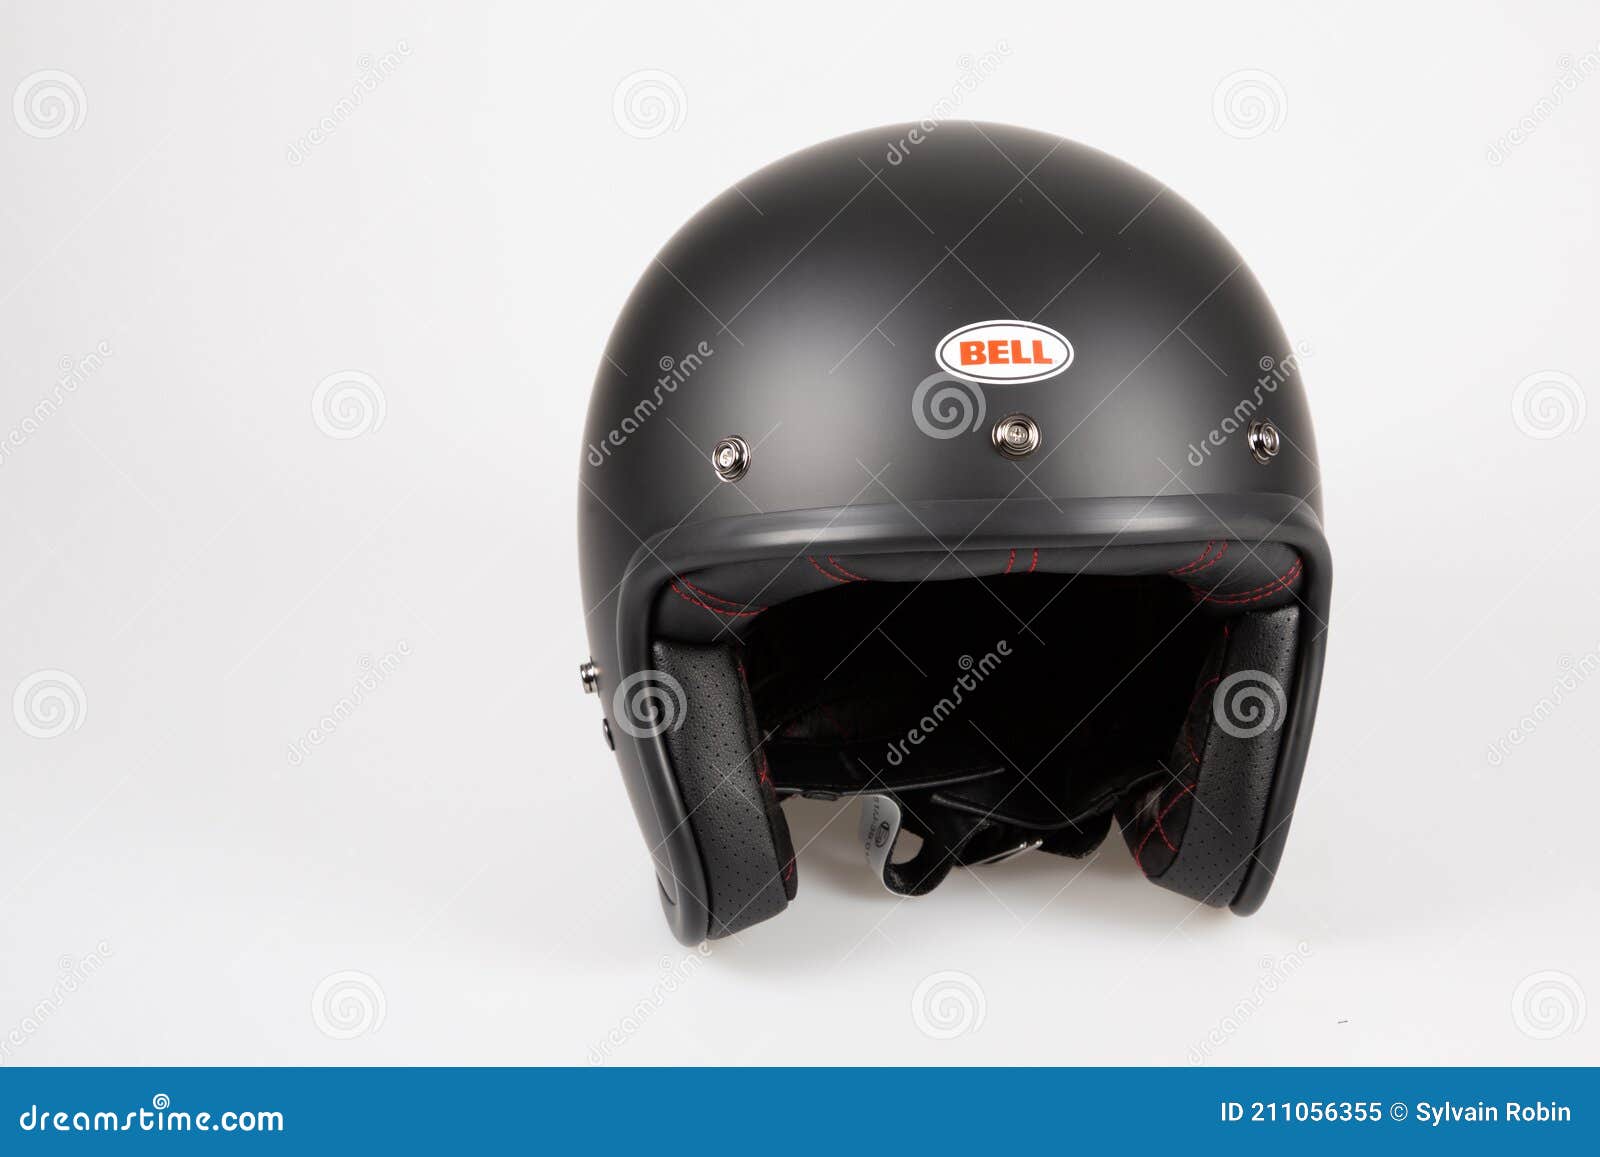 Fractie Geleerde Niet meer geldig Bell Classic Black Bike Helmet Motorbike with Logo Brand Sign for Sale in  Motorcycle Editorial Image - Image of equipment, detail: 211056355